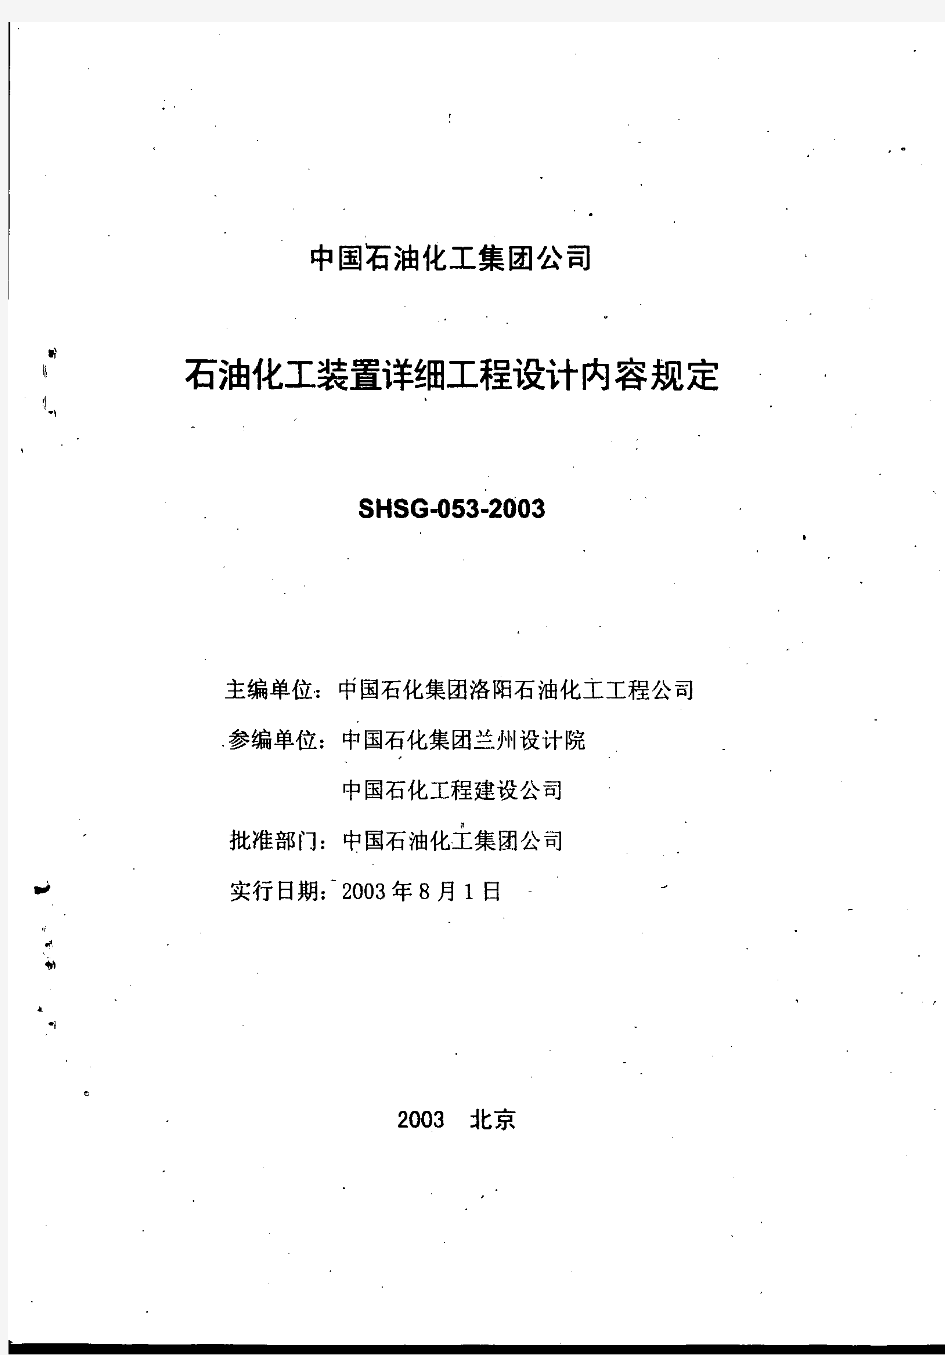 SHSG-033-2003 中石化基础(详细)工程设计内容规定